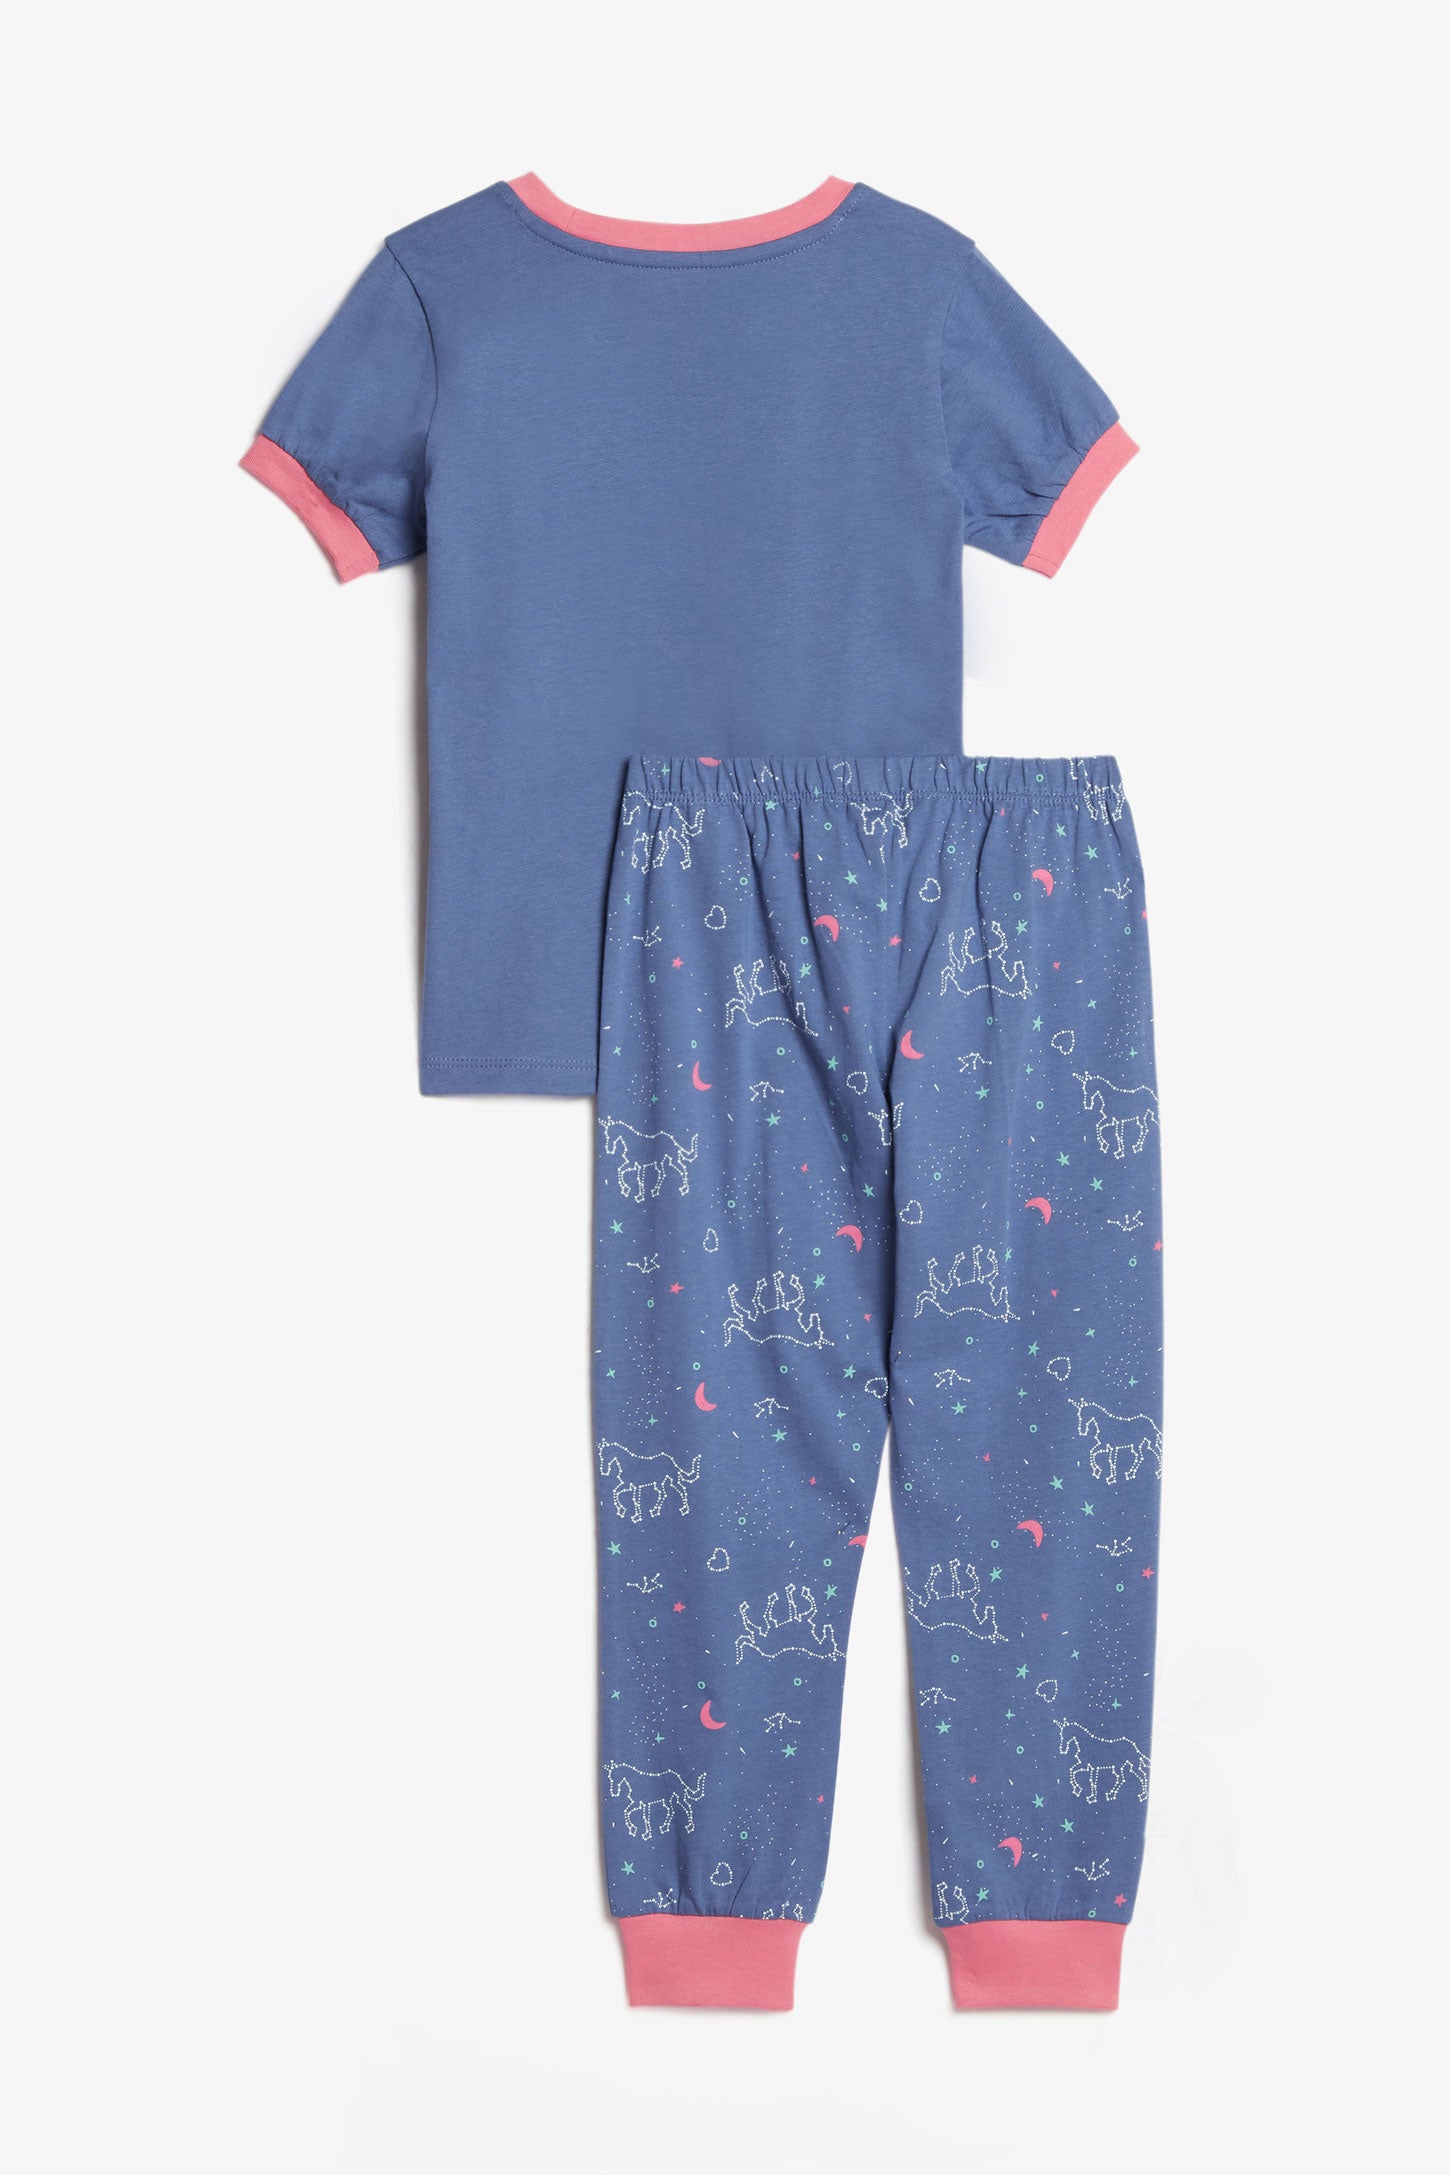 Pyjama 2-pièces en coton, 2/35$ - Enfant fille && MARIN